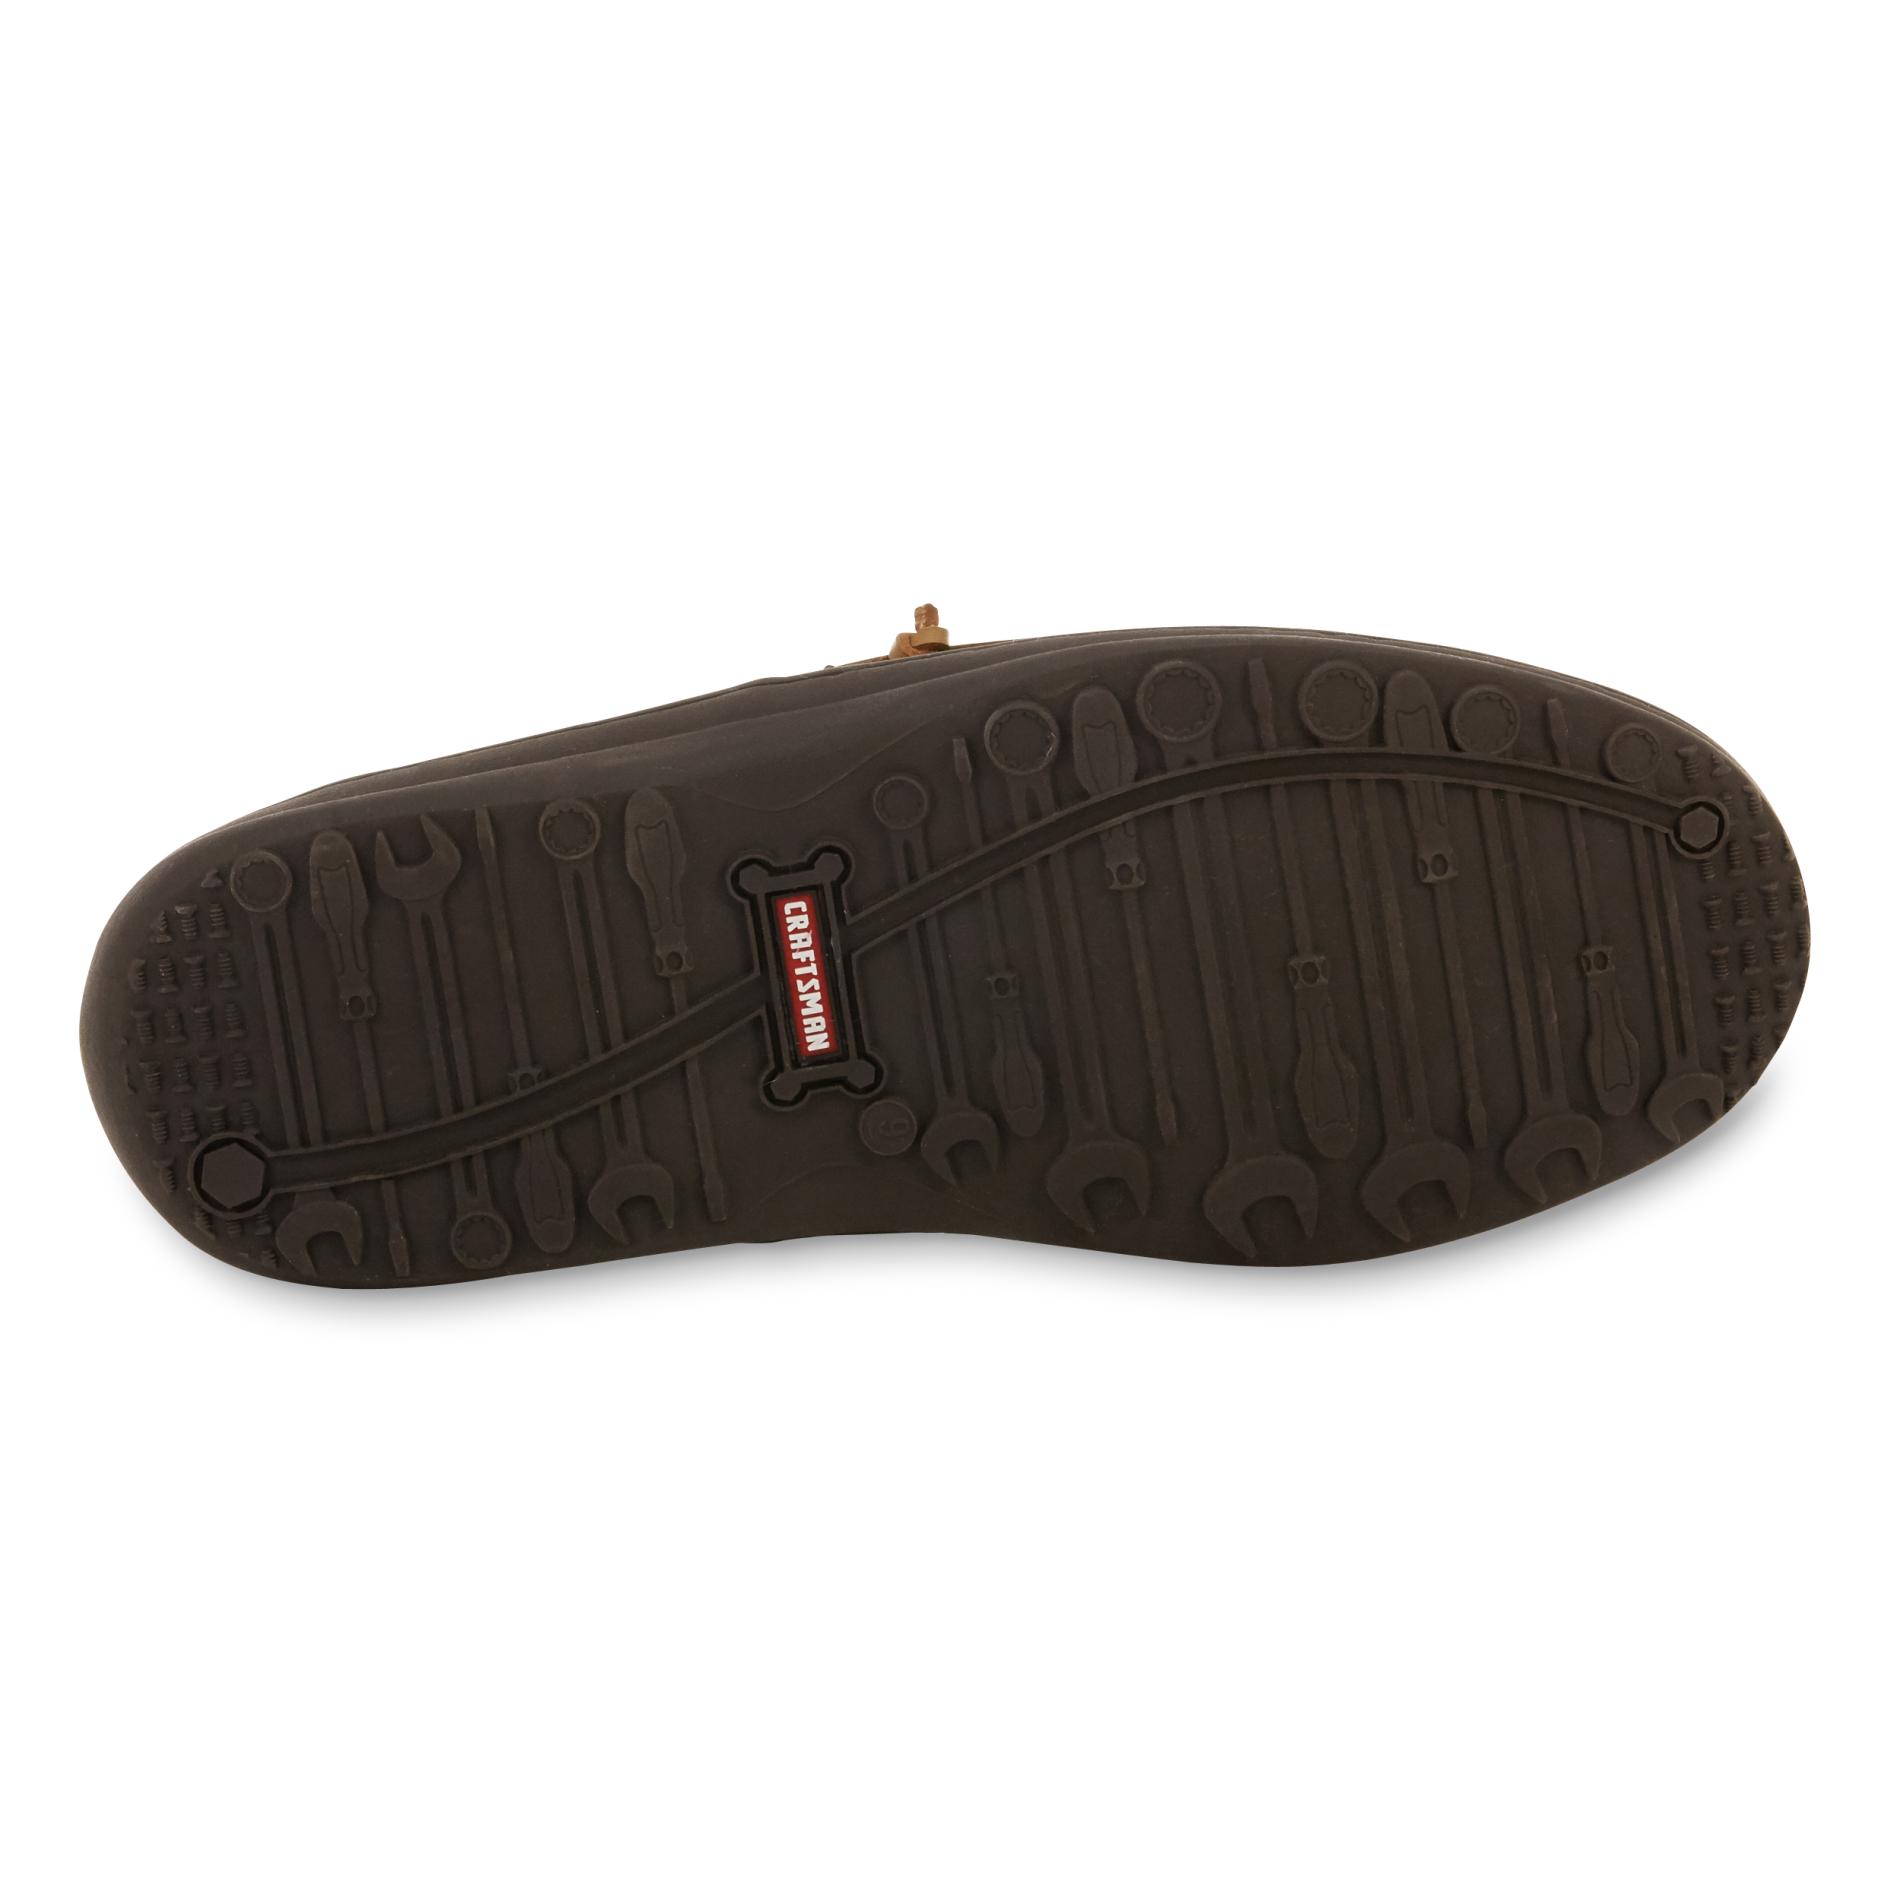 craftsman men's tan suede moccasin slipper